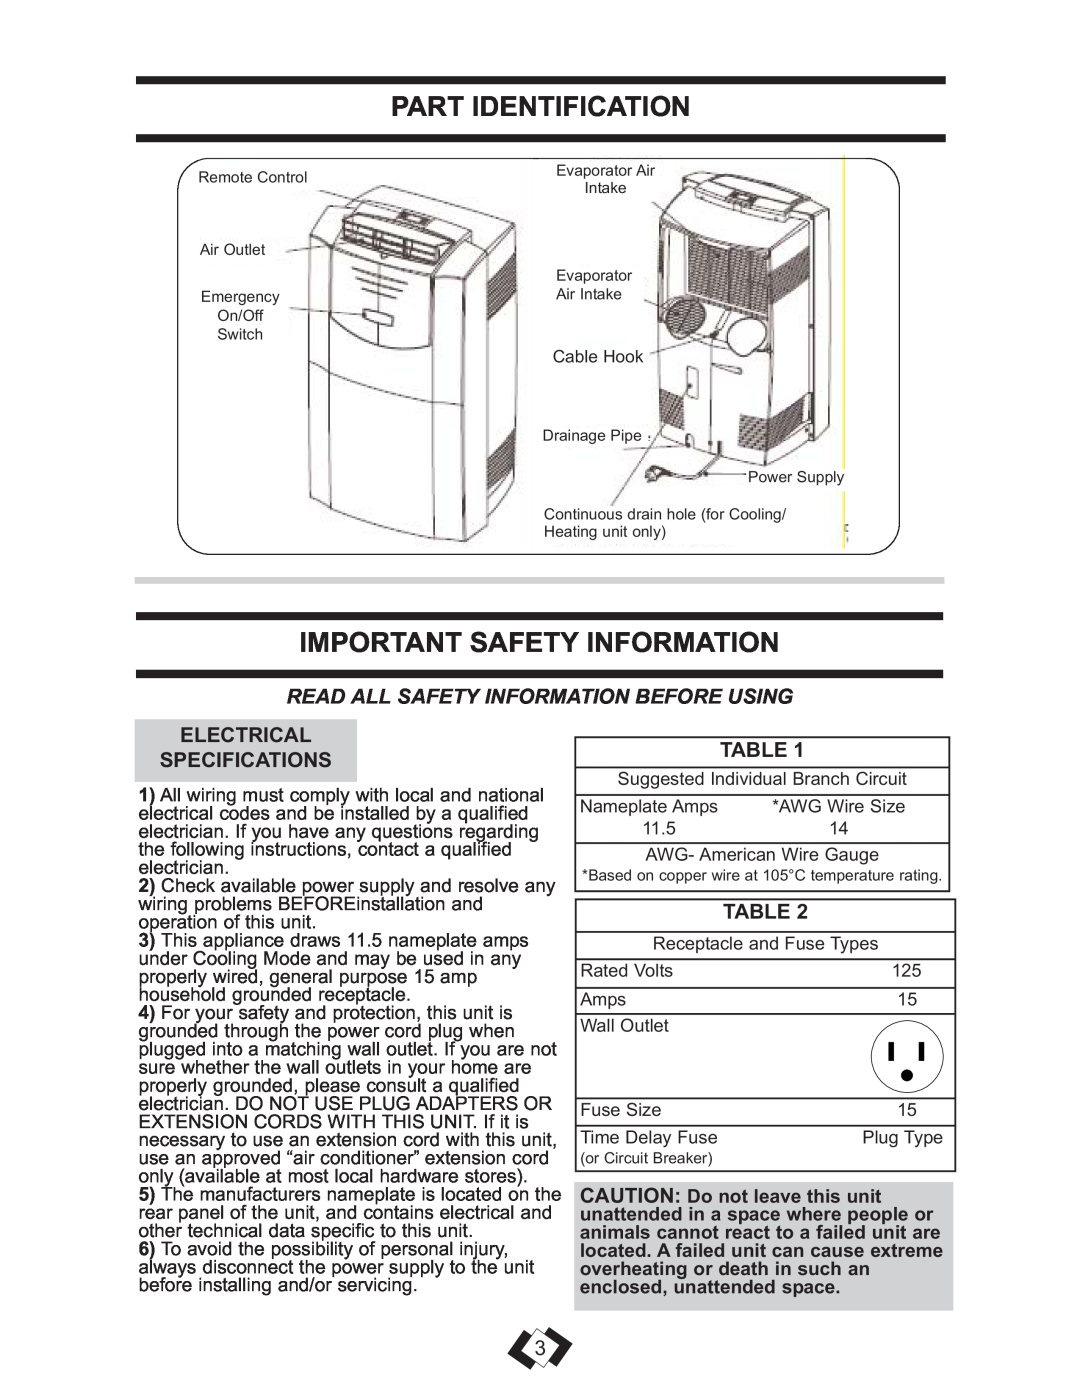 Danby DPAC 13009 Part Identification, Important Safety Information, Read All Safety Information Before Using 